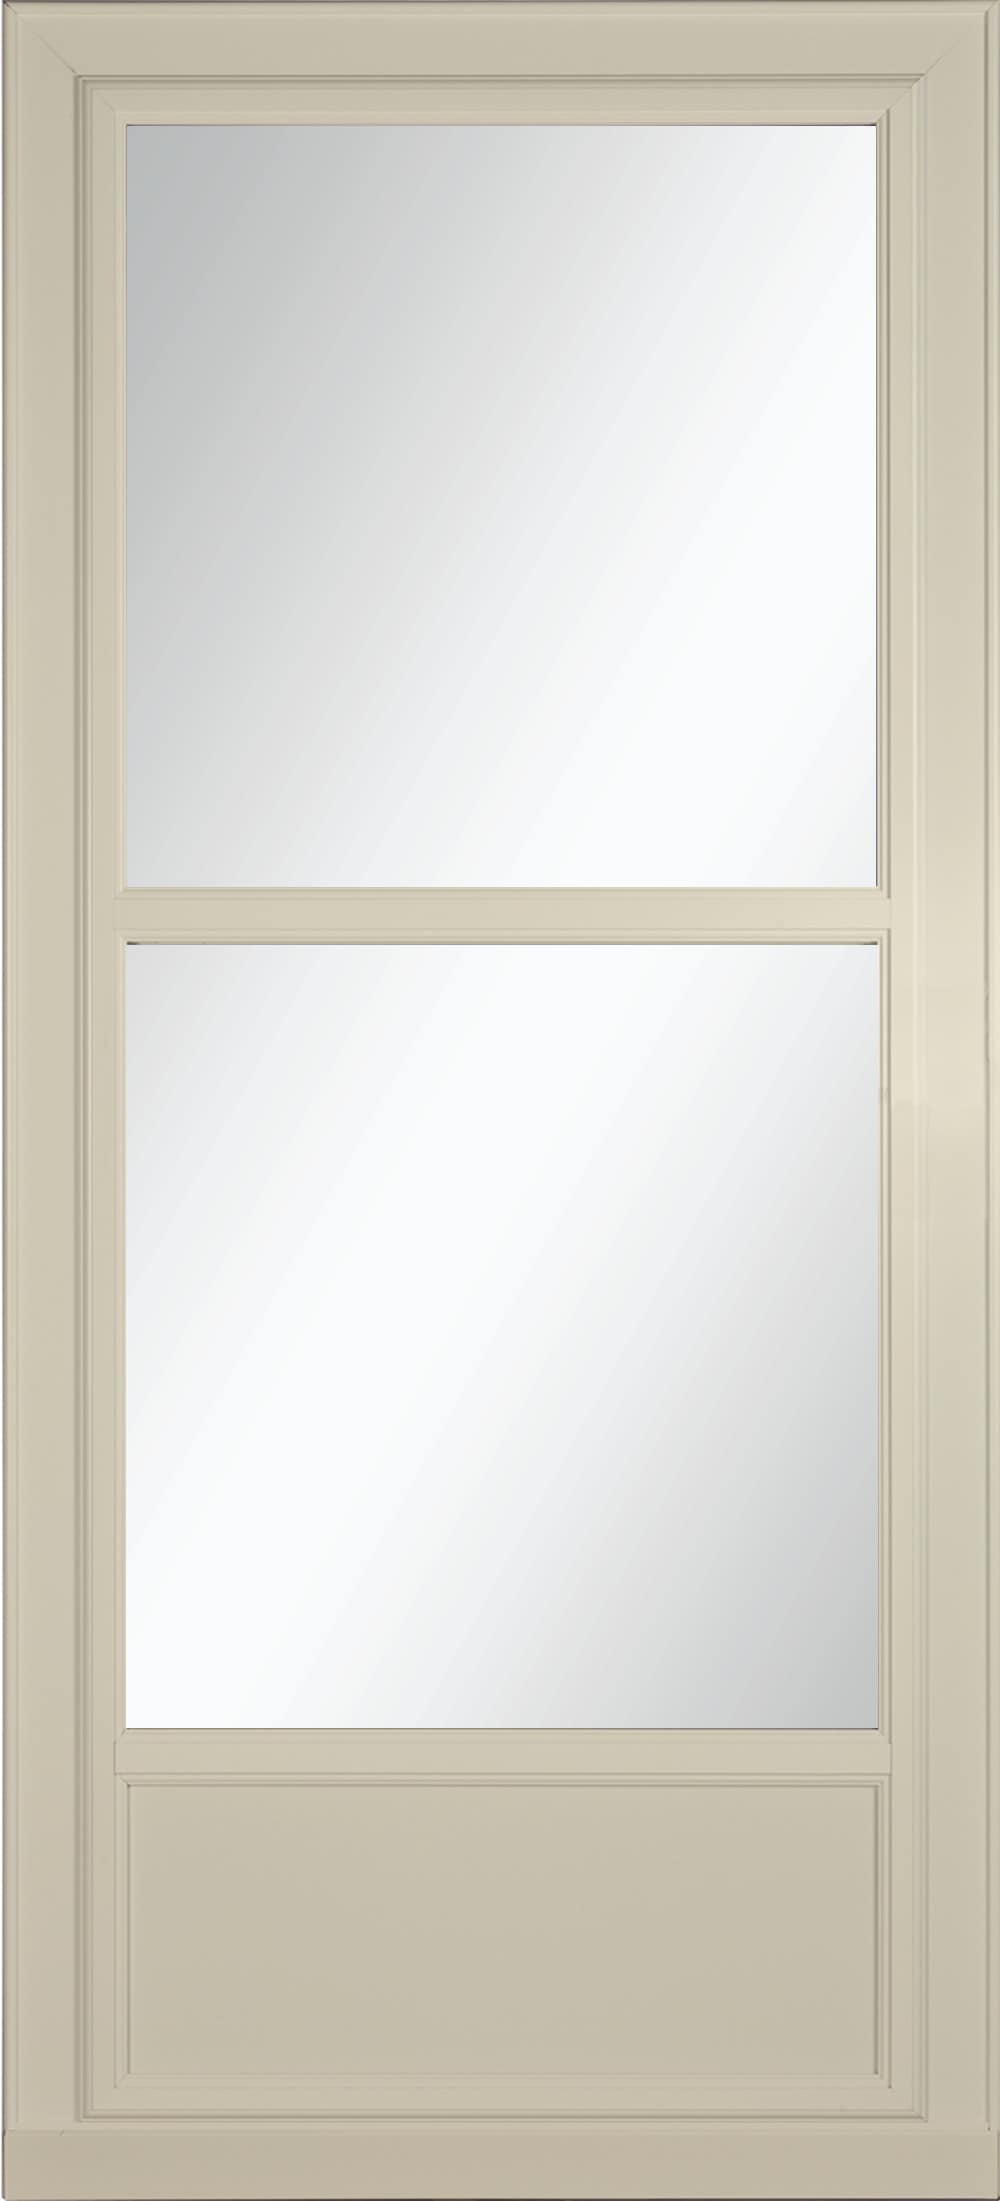 Tradewinds Selection 32-in x 81-in Almond Mid-view Retractable Screen Aluminum Storm Door in Off-White | - LARSON 14606081